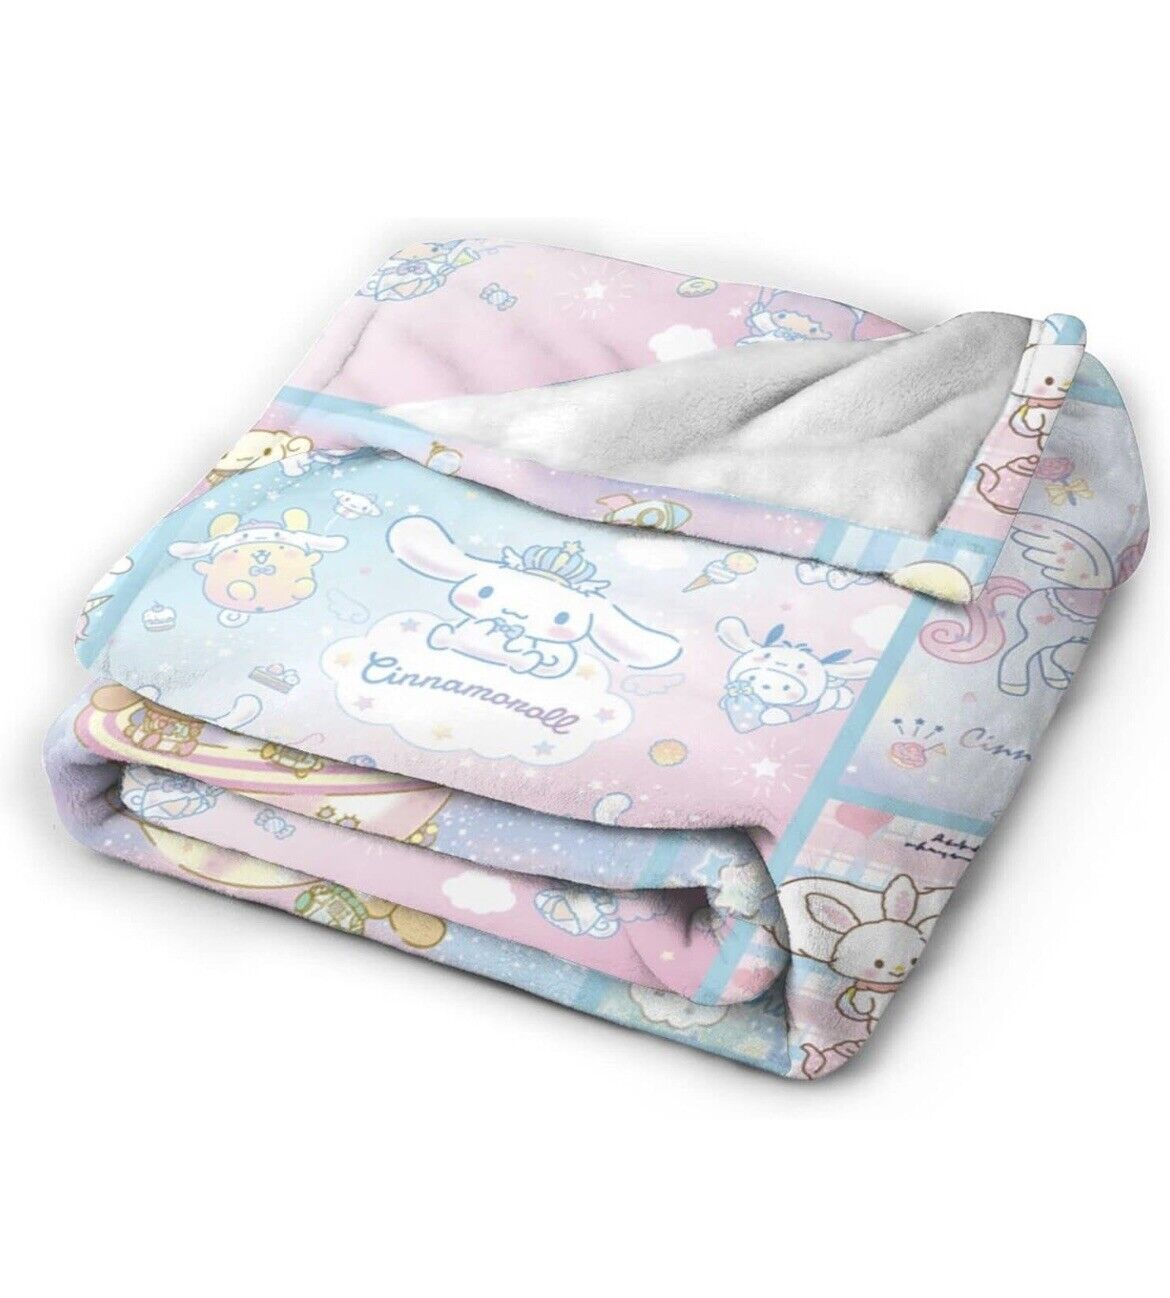 RARE Blue Cinnamoroll Blanket Soft And Warm Fleece Blankets 40”x30”